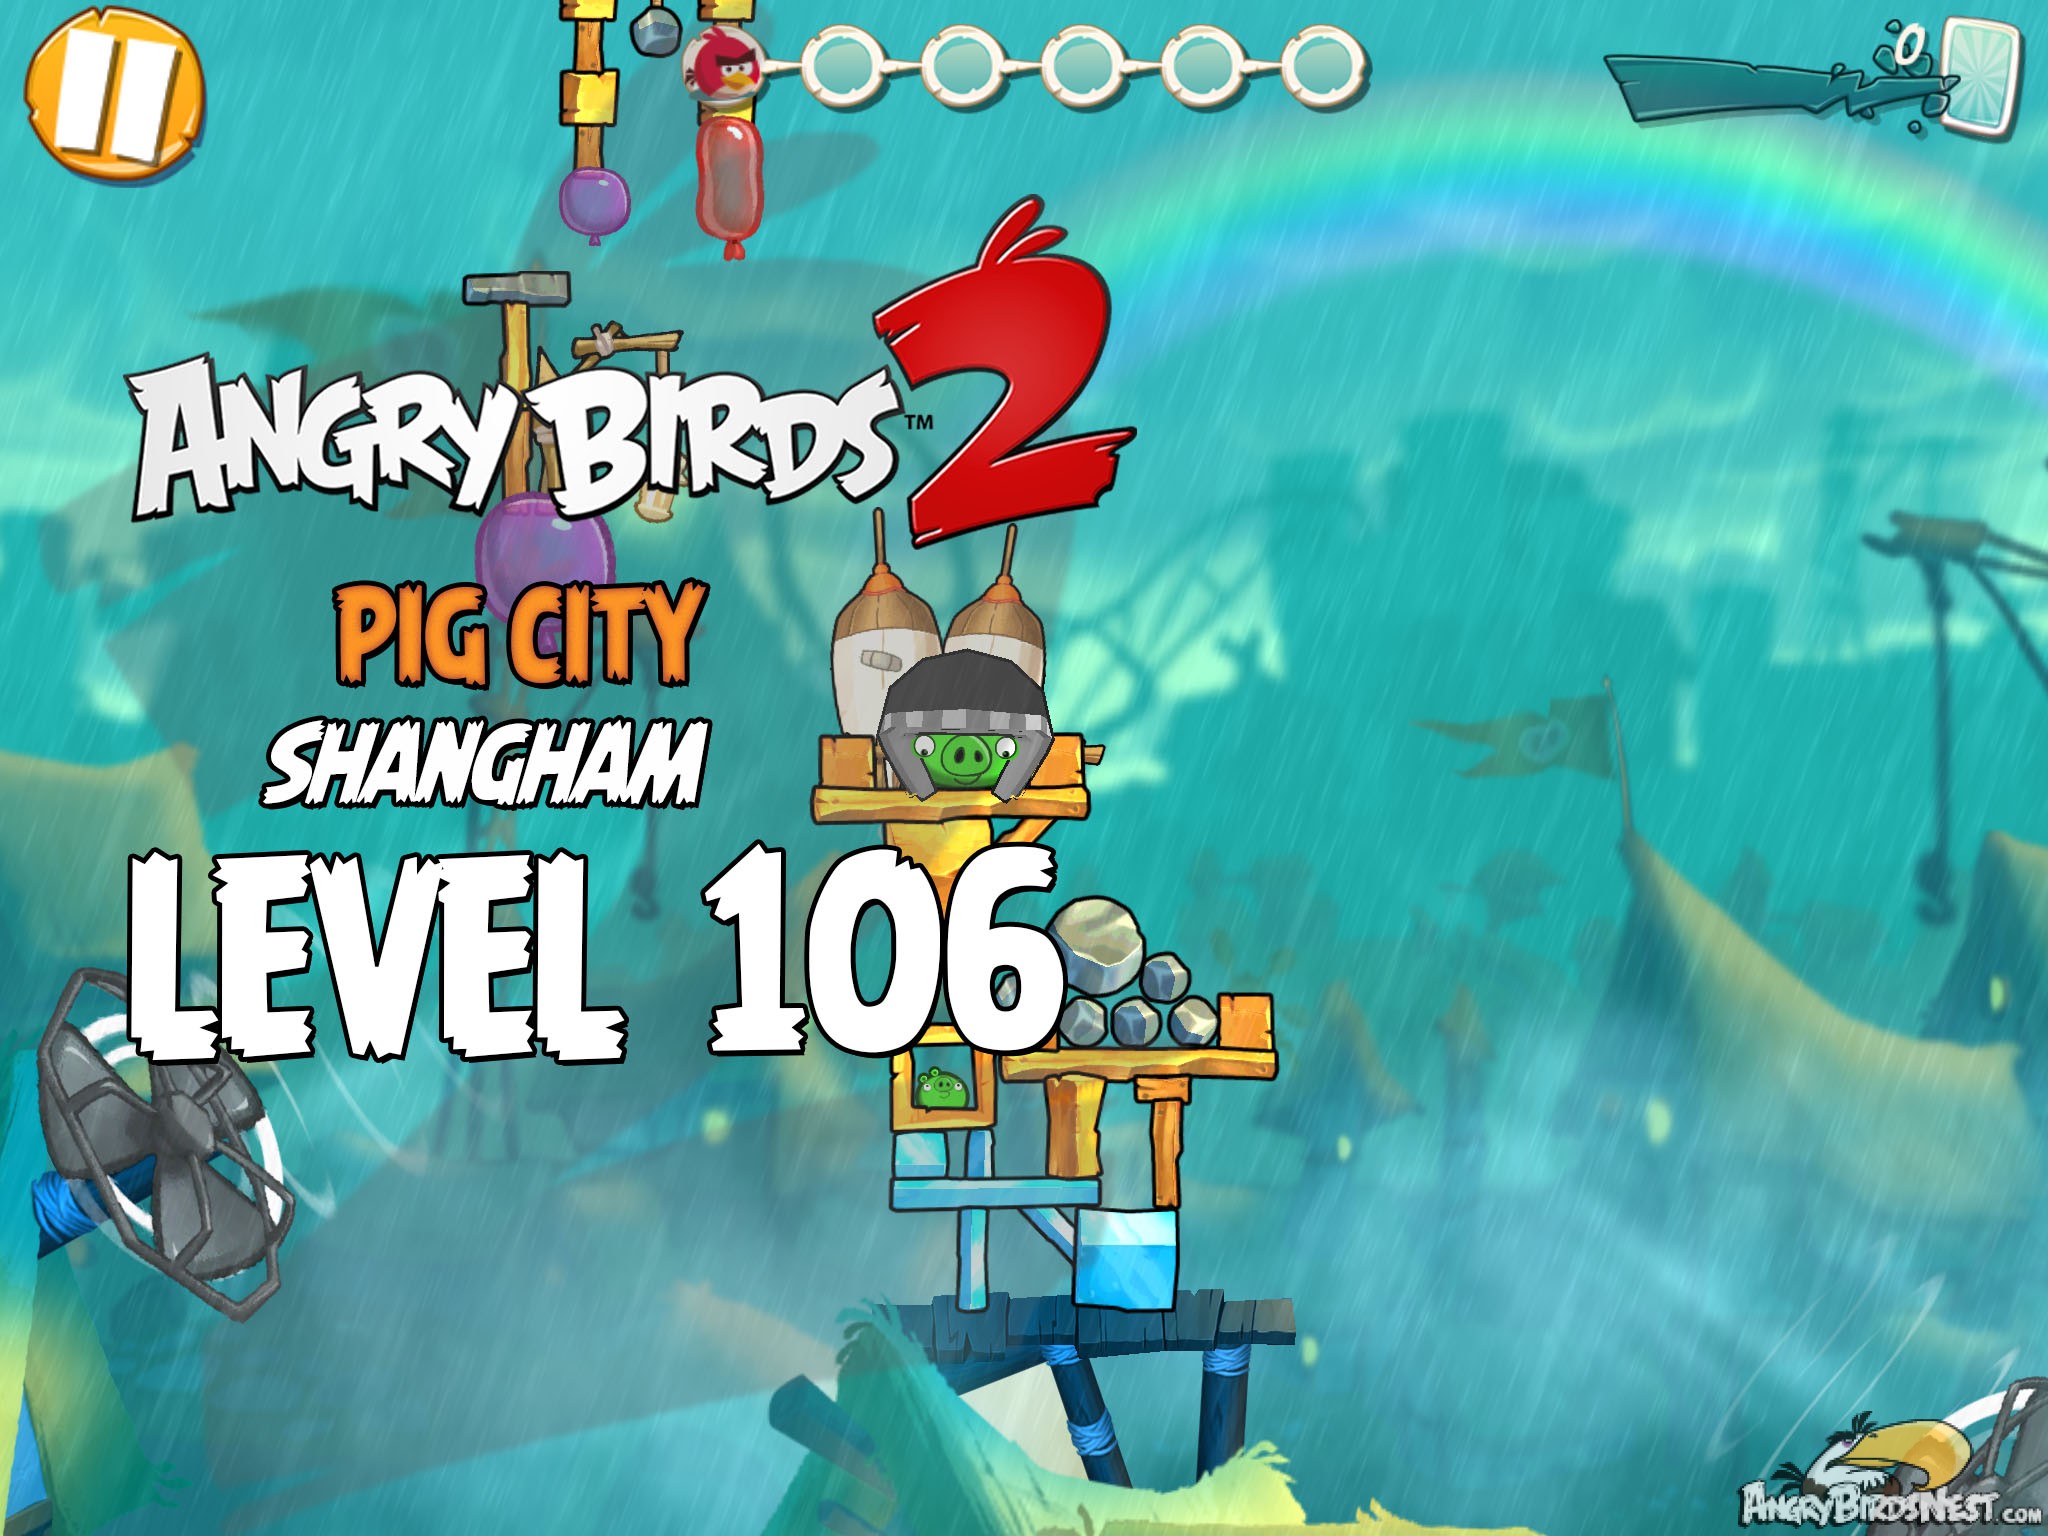 Angry Birds 2 Pig City Shangham Level 106